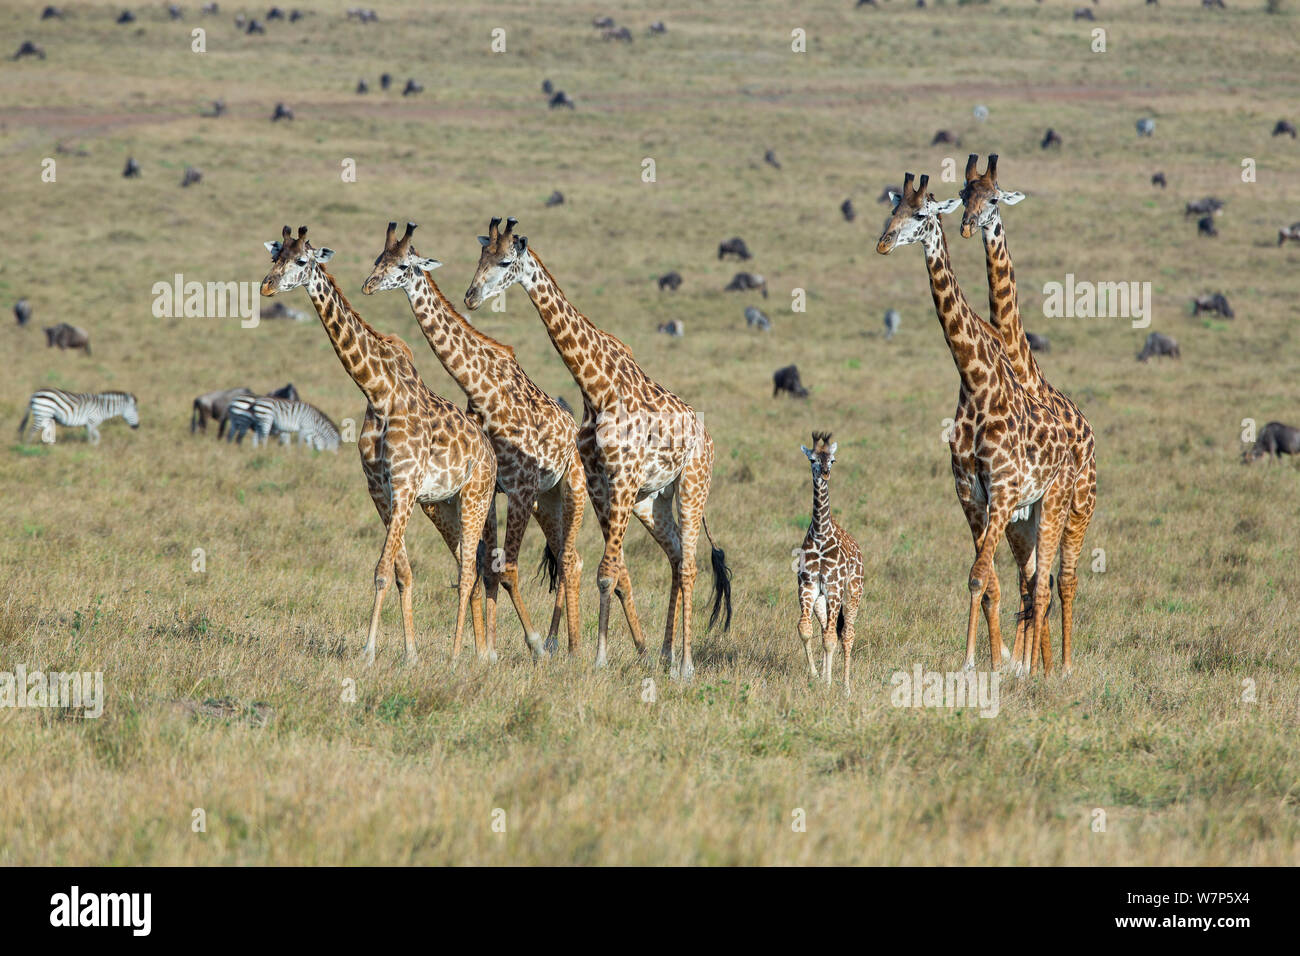 Masai Giraffe (Giraffa cameleopardalis tippelskirchi), herd with baby and various plains mammals in background. Masai-Mara game reserve, Kenya. Stock Photo